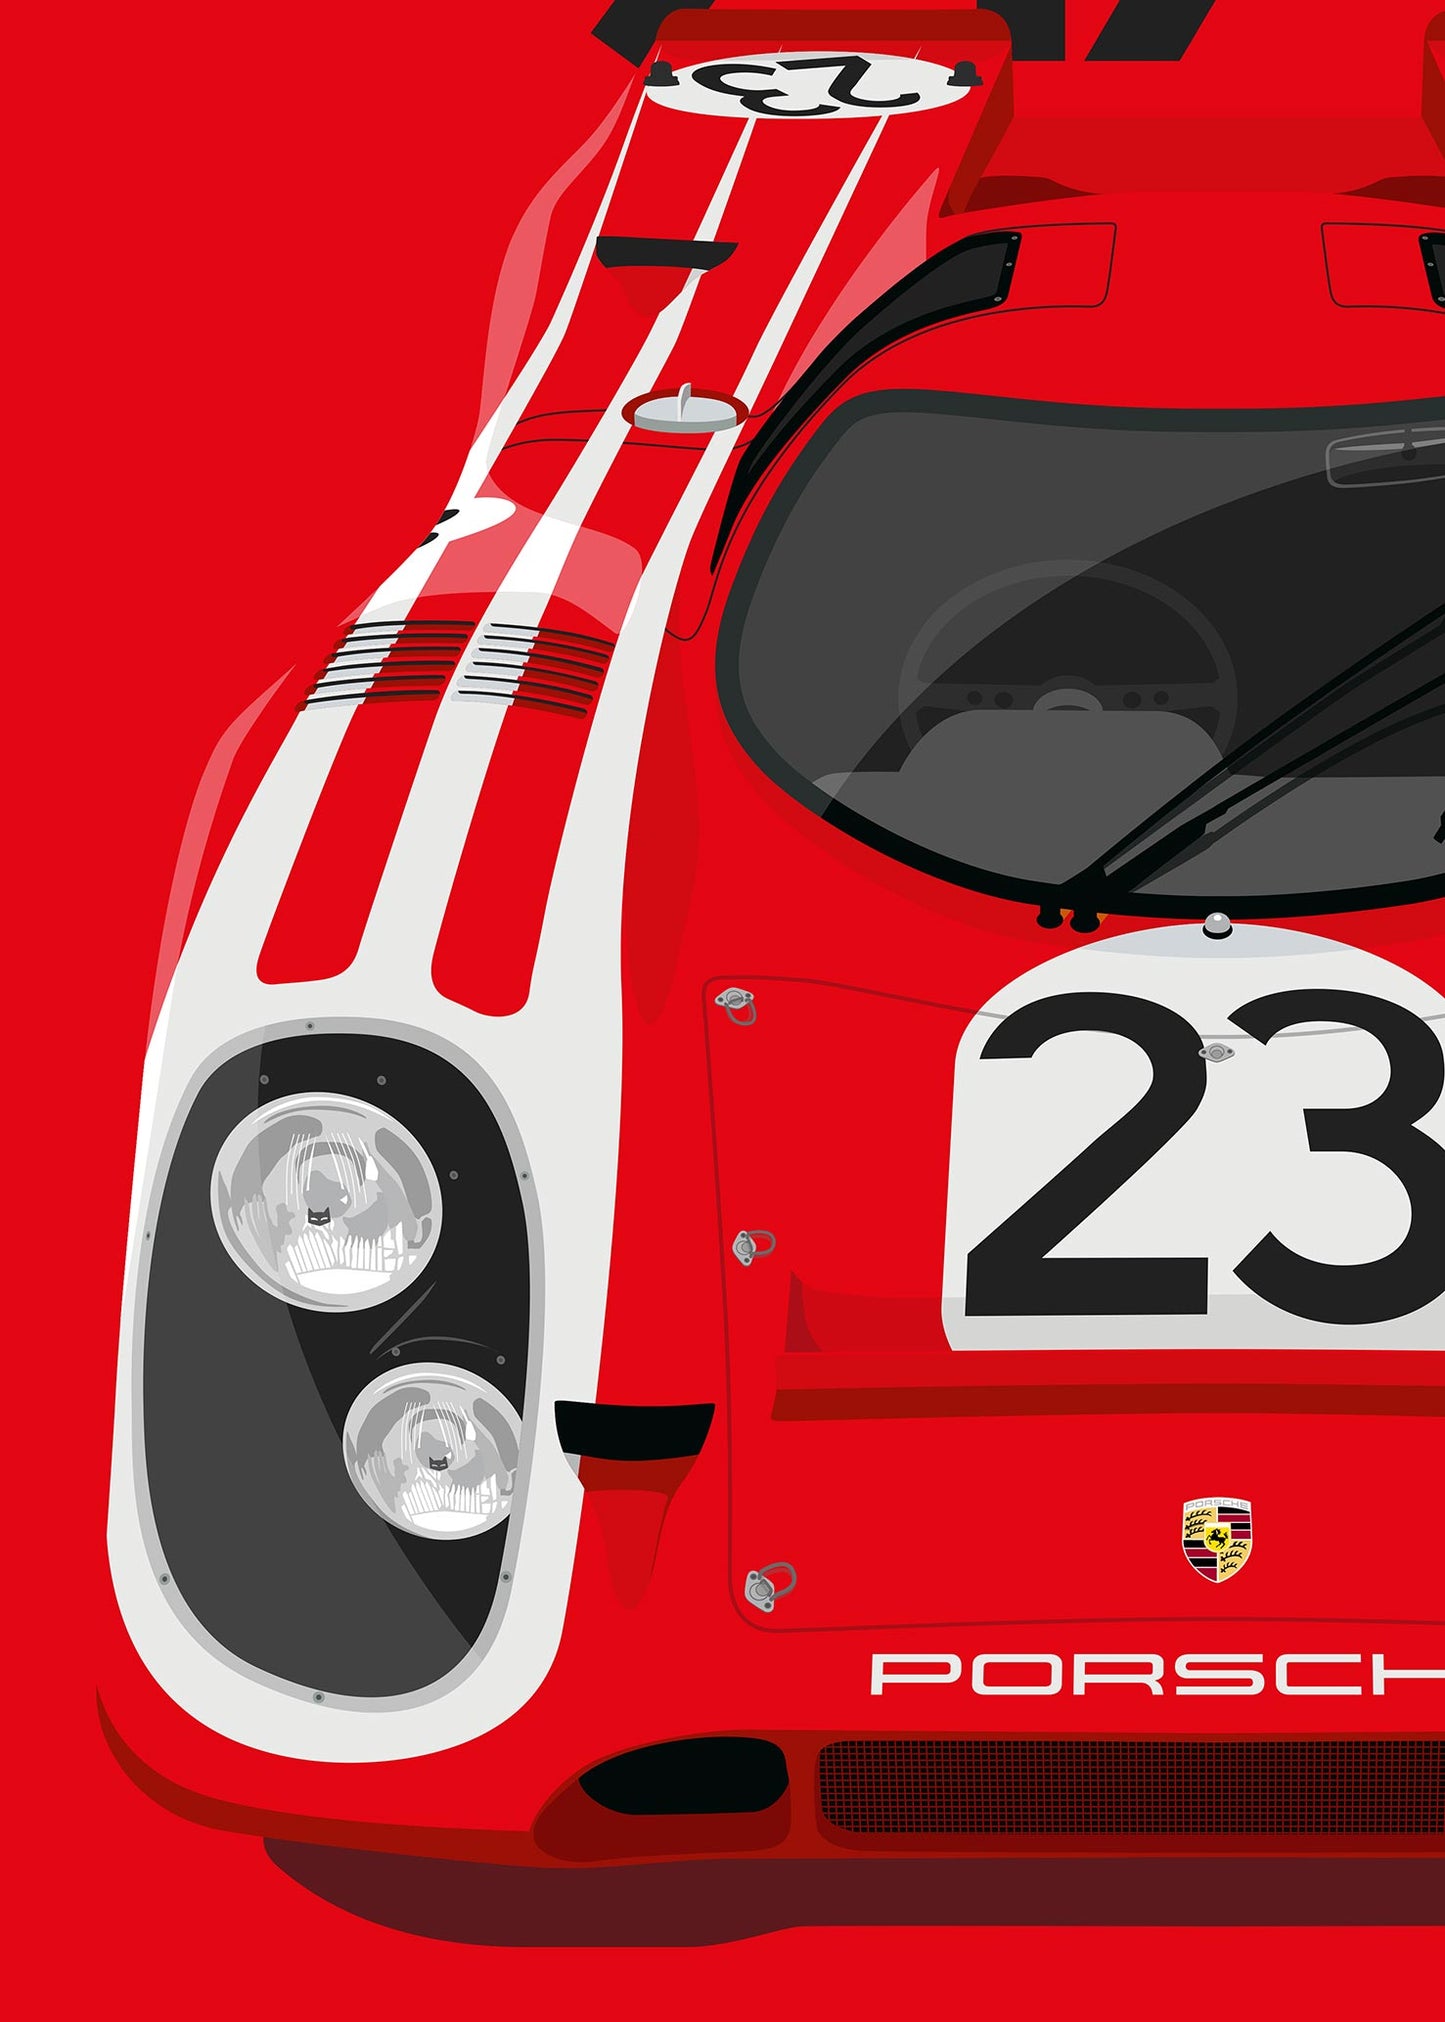 1970 Porsche 917K Salzburg No.23 - poster print